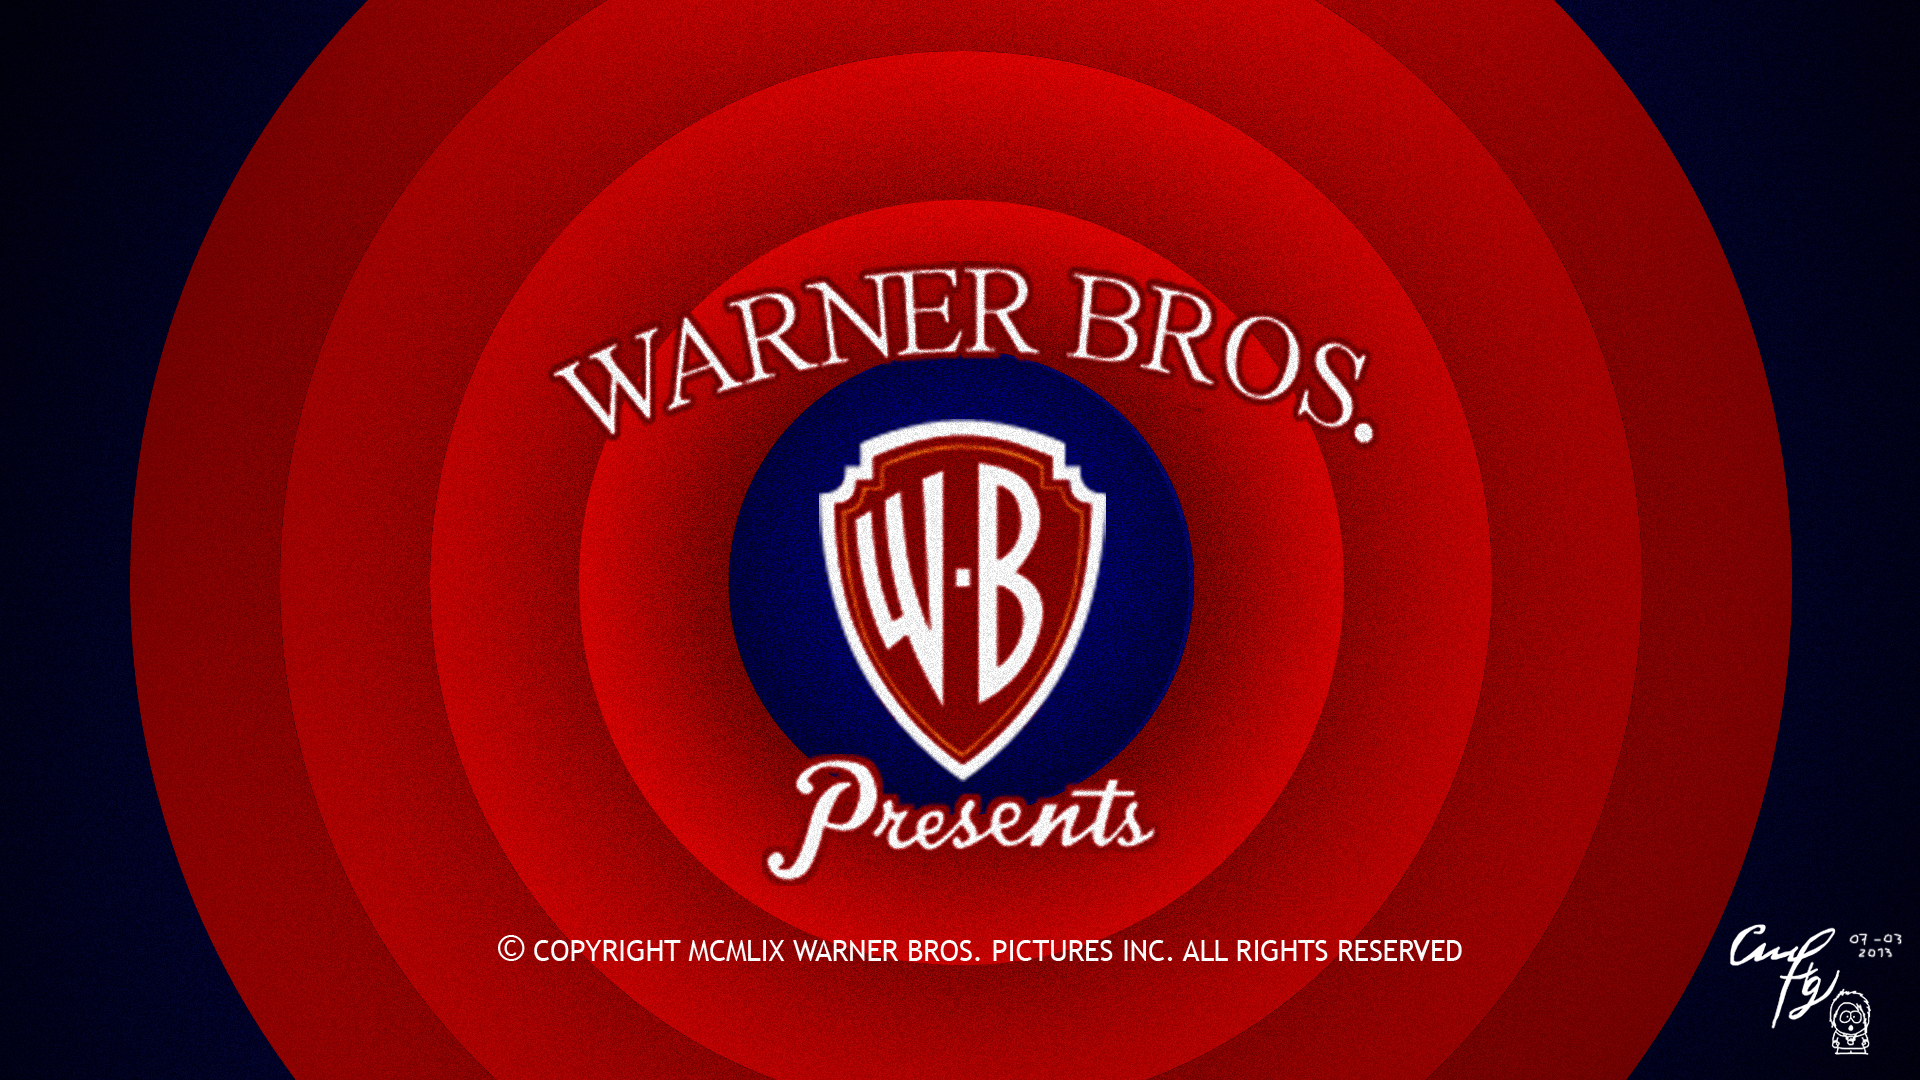 Warner Bros Wallpaper. Warner Bros Wallpaper, Jocelyn Warner Wisteria Wallpaper and Warner Bros DC Movies Wallpaper